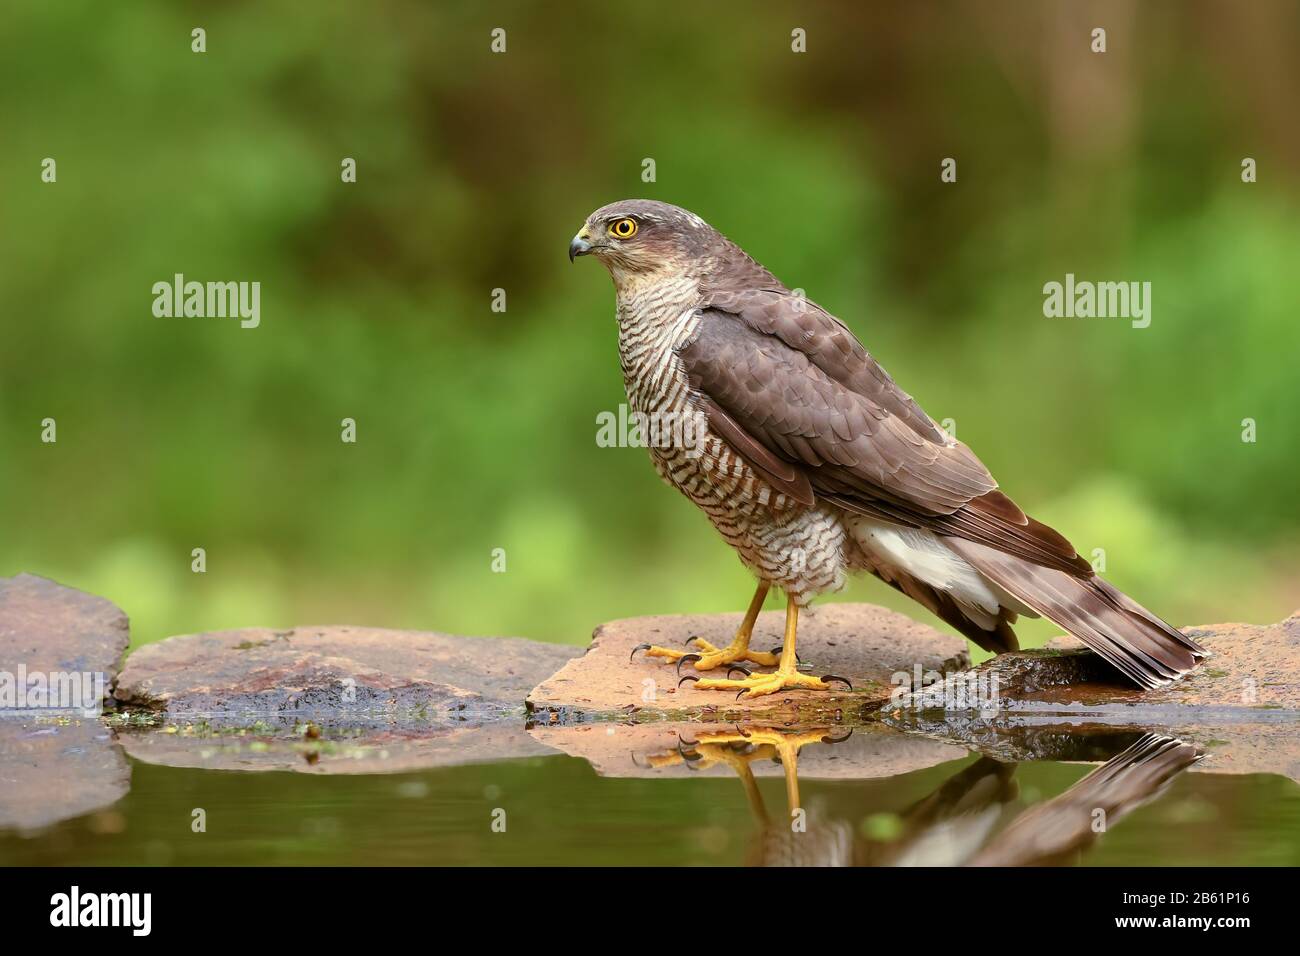 Eurasian Sparrowhawk - Accipiter nisus, beautiful bird of prey form Euroasian forests and woodlands, Hortobagy, Hungary. Stock Photo